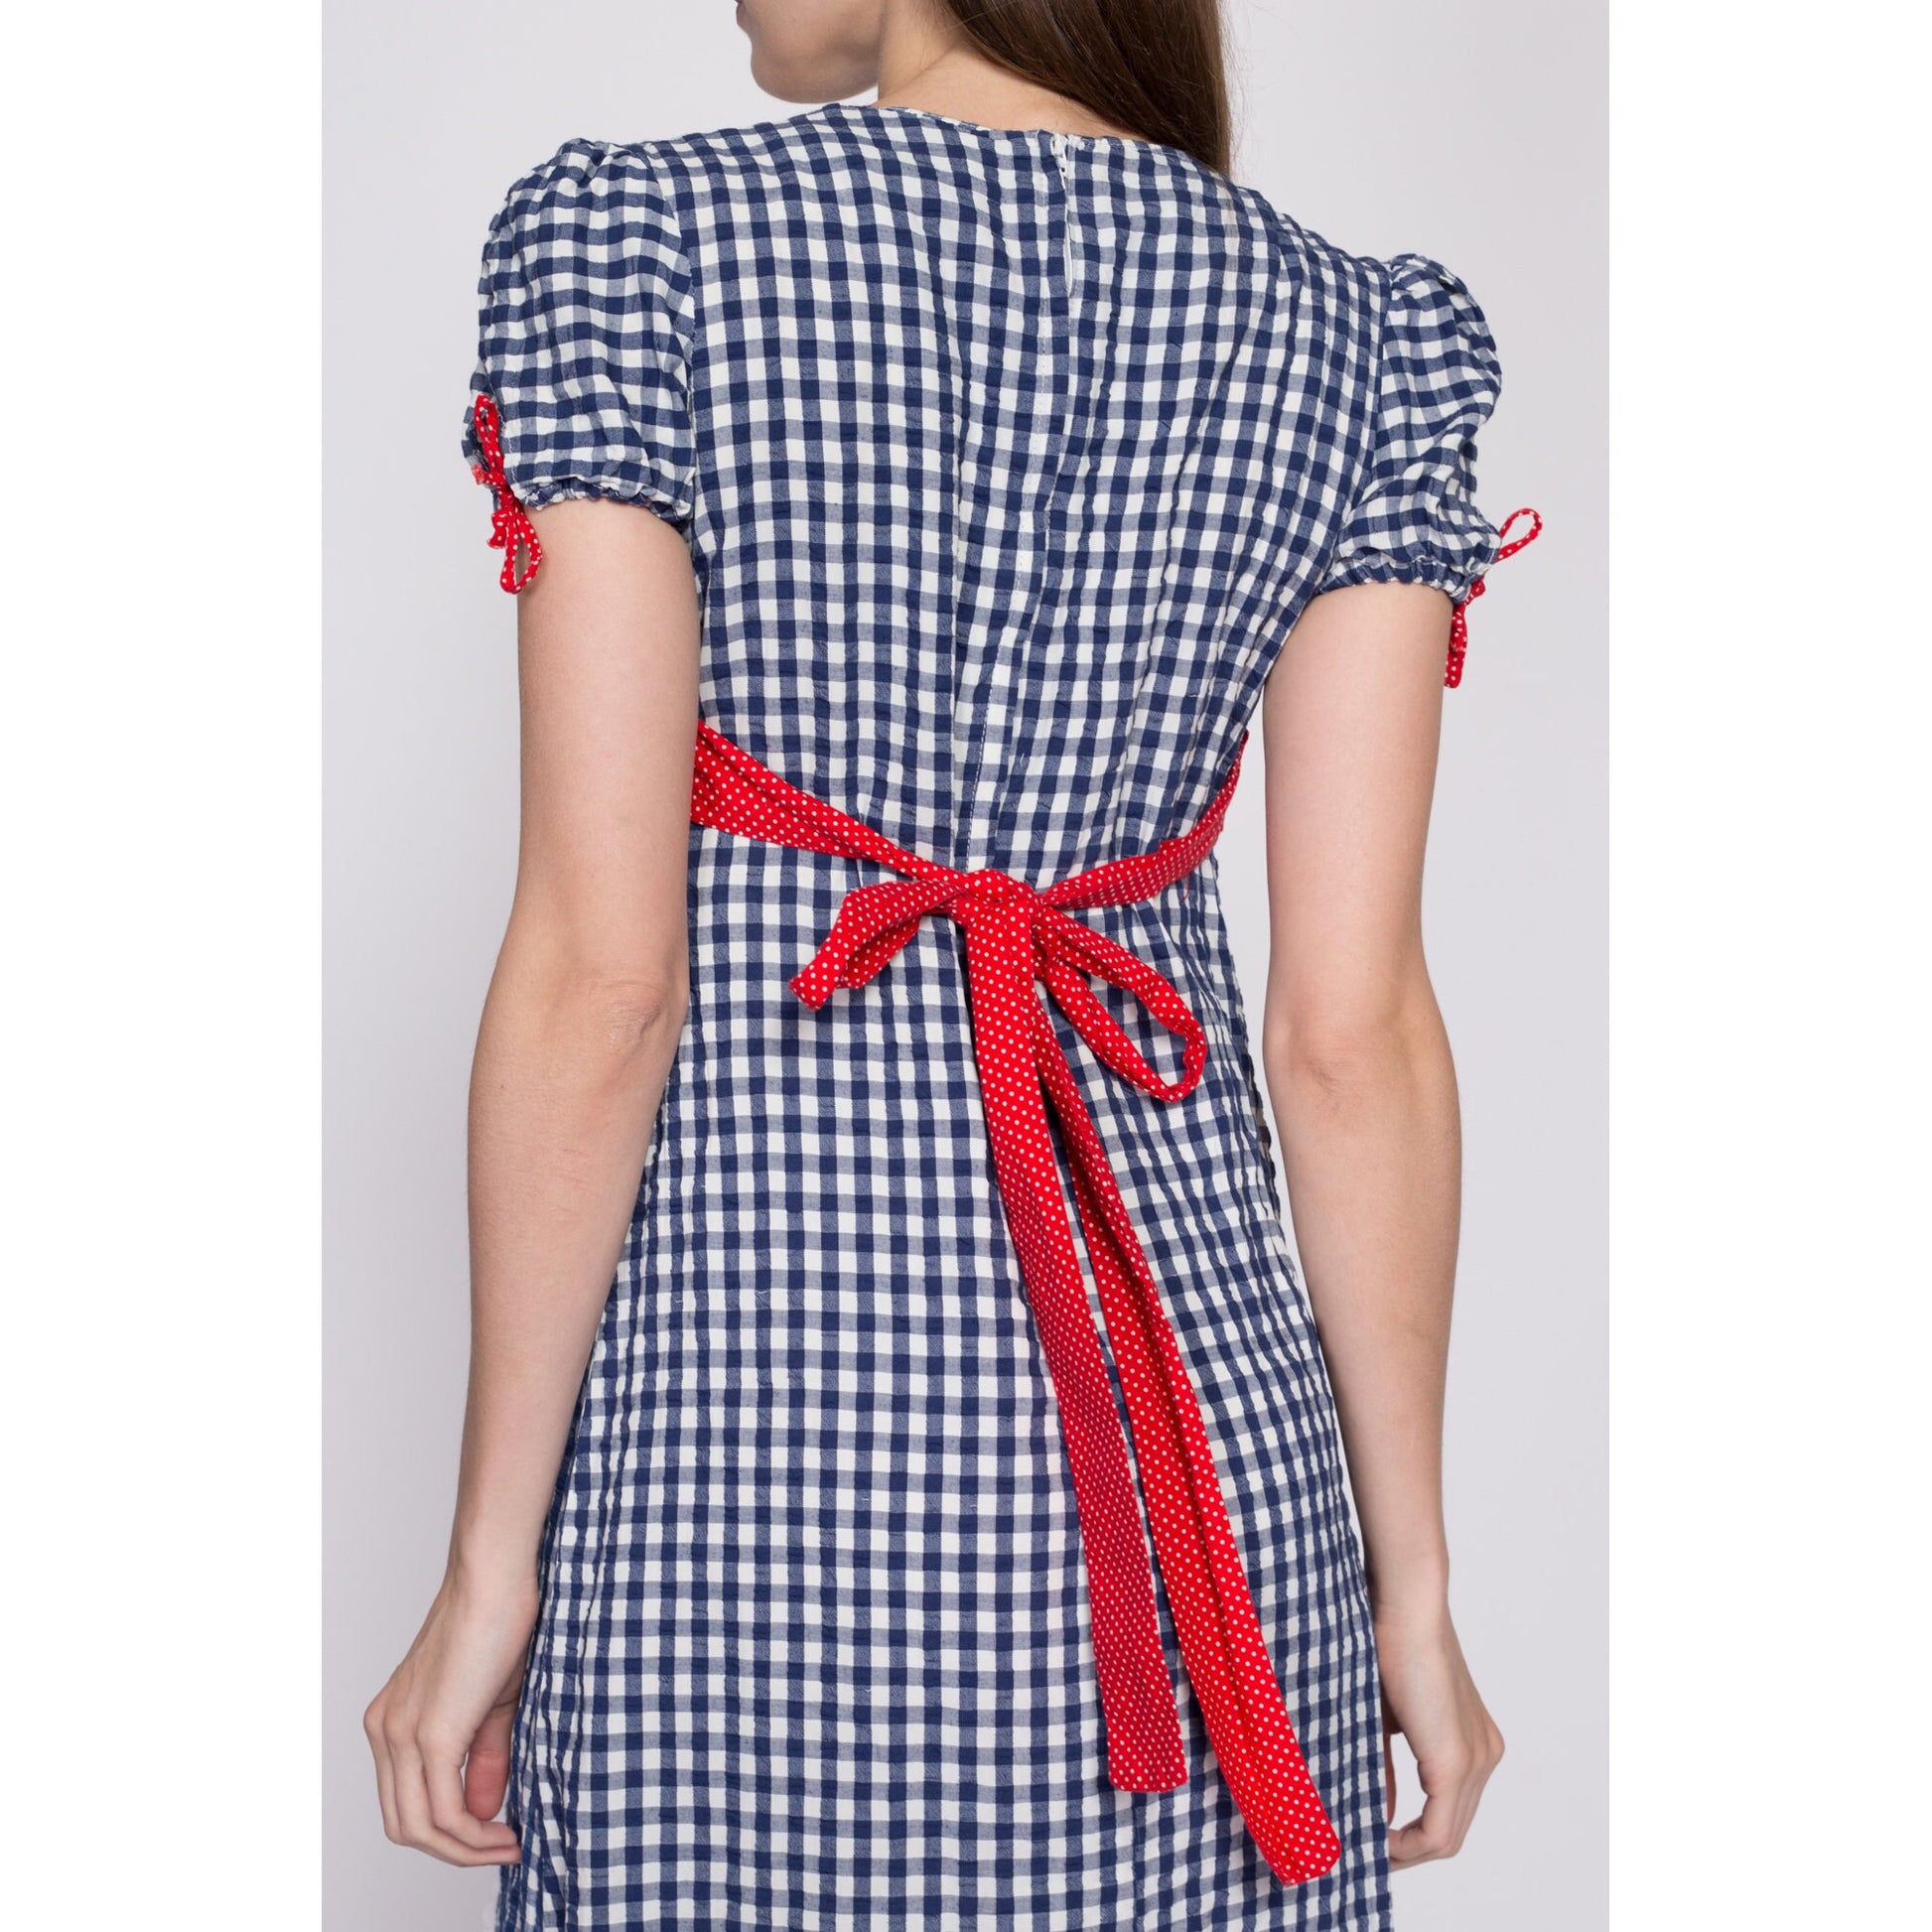 Petite Small 60s Gingham Prairie Maxi Dress | Vintage Red White Blue Boho A Line Cottagecore Lace Apron Dress